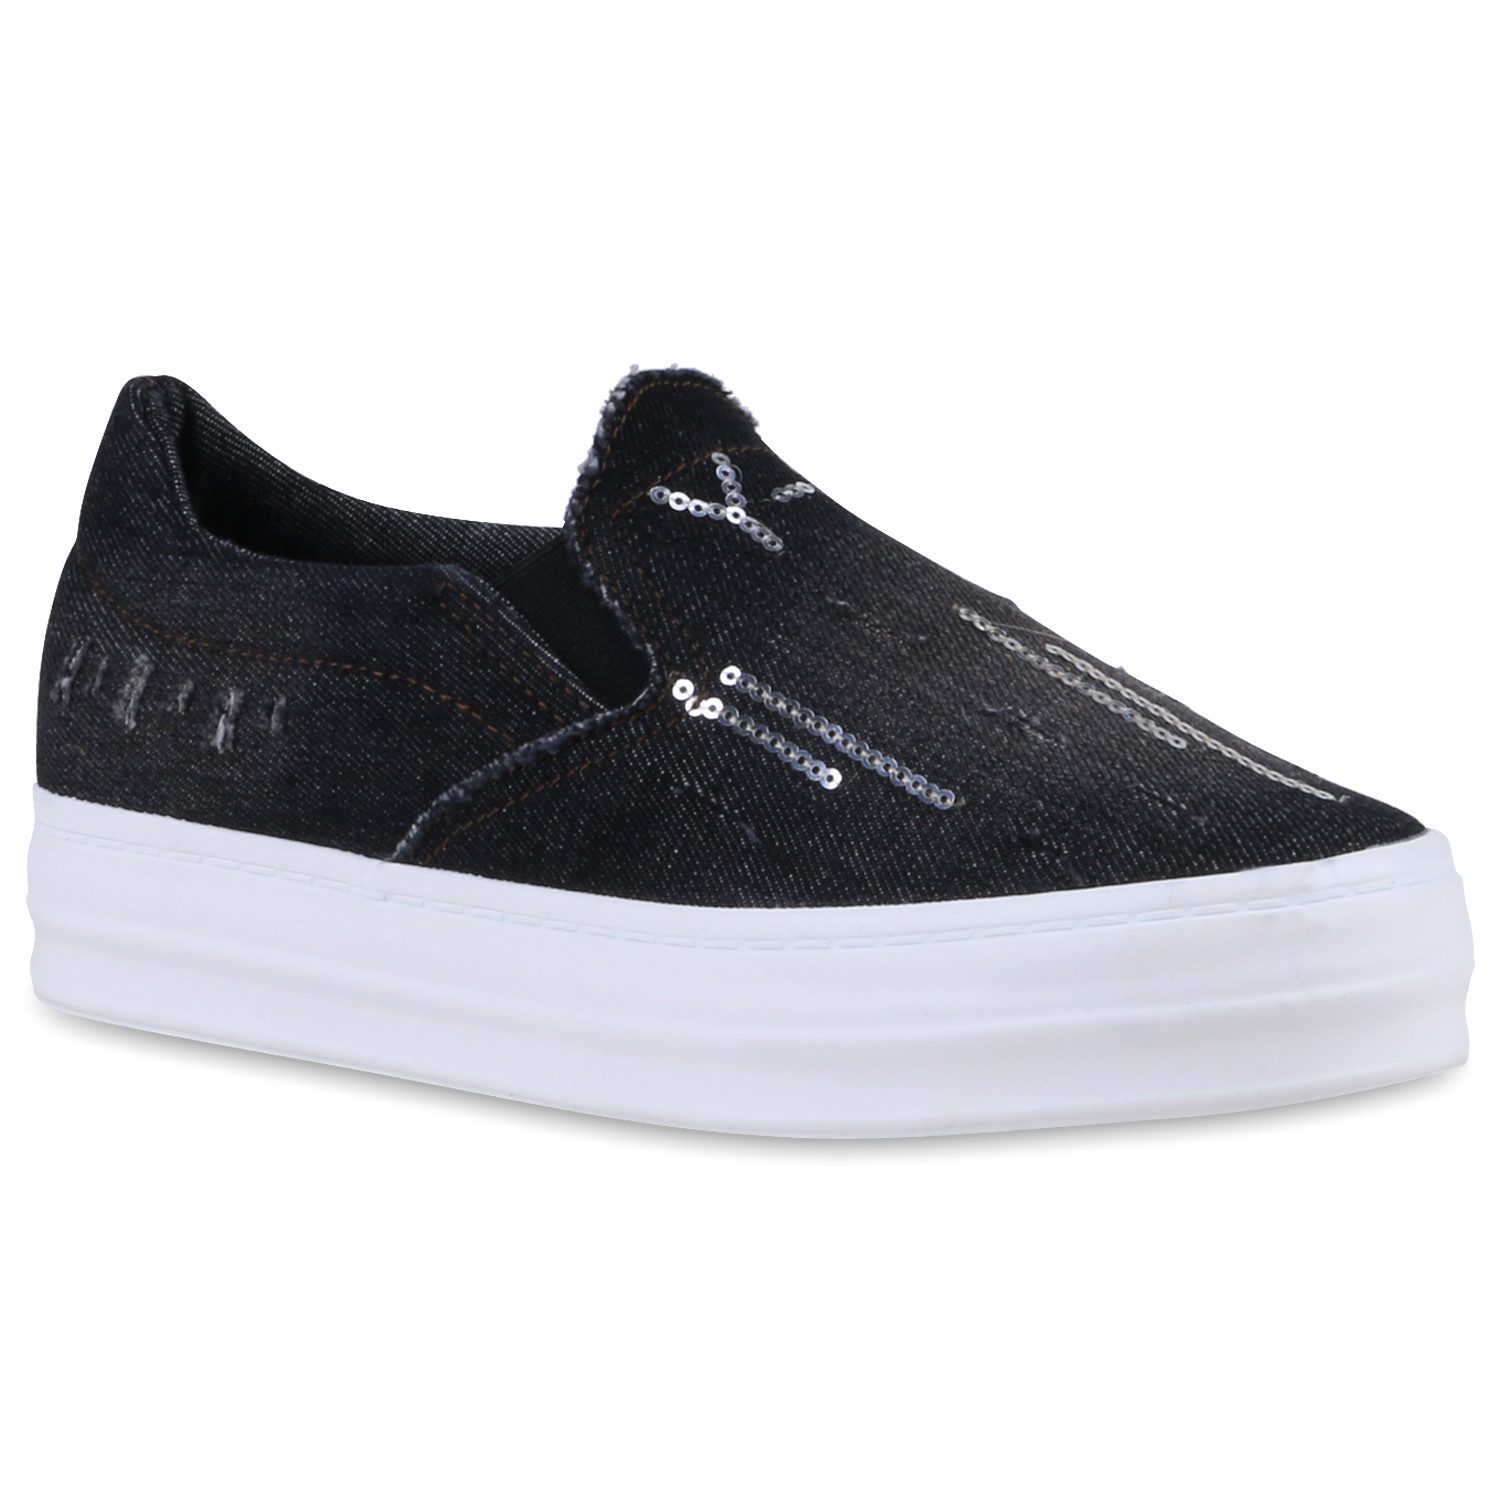 VAN HILL 811299 Slip-On Sneaker Bequeme Schuhe